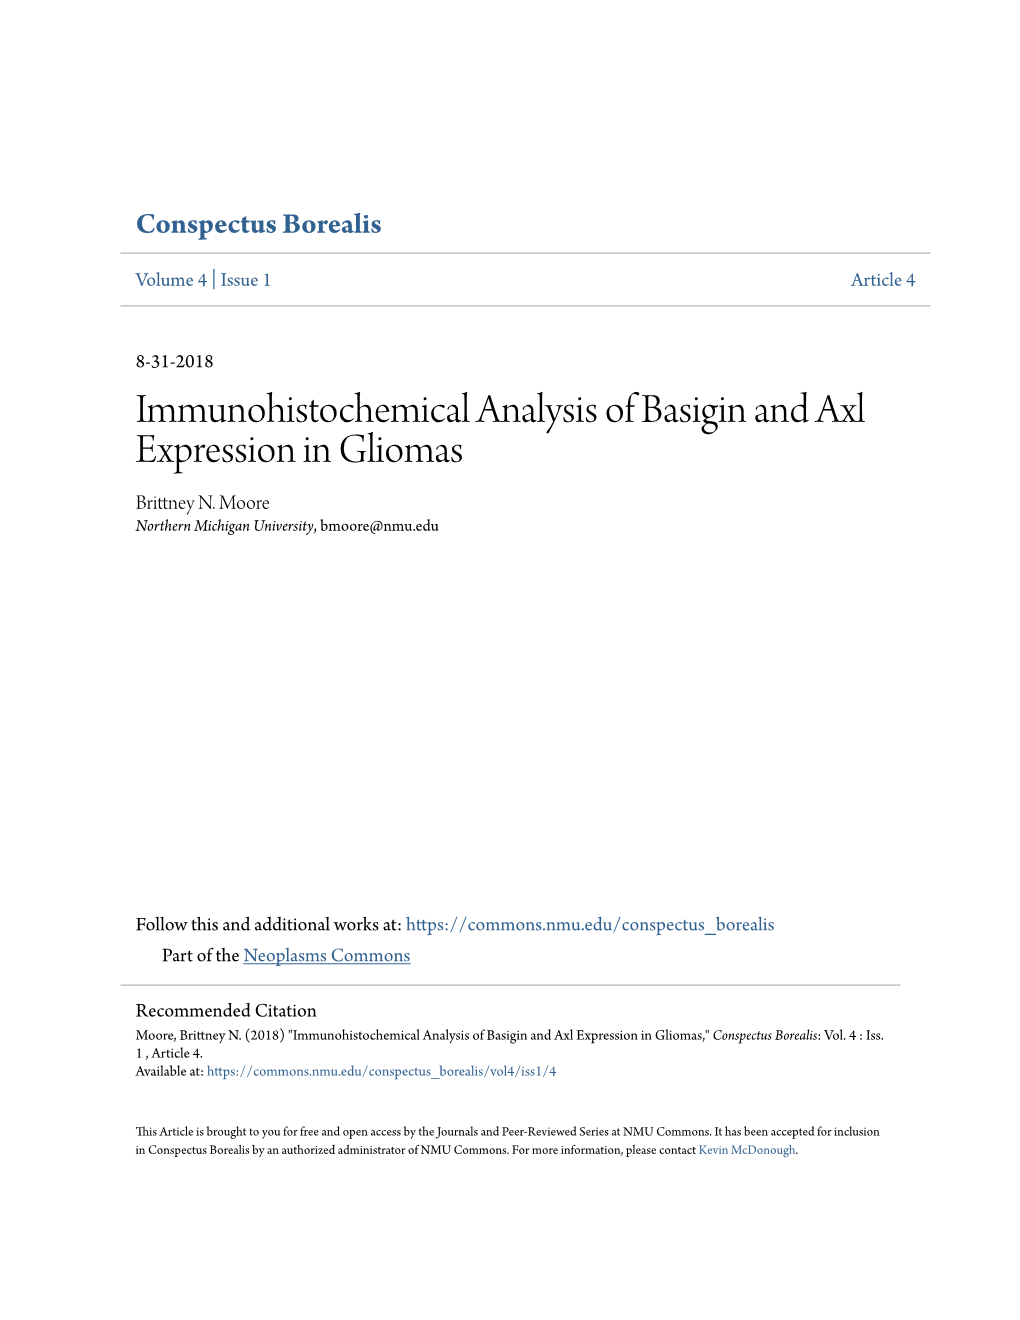 Immunohistochemical Analysis of Basigin and Axl Expression in Gliomas Brittney N